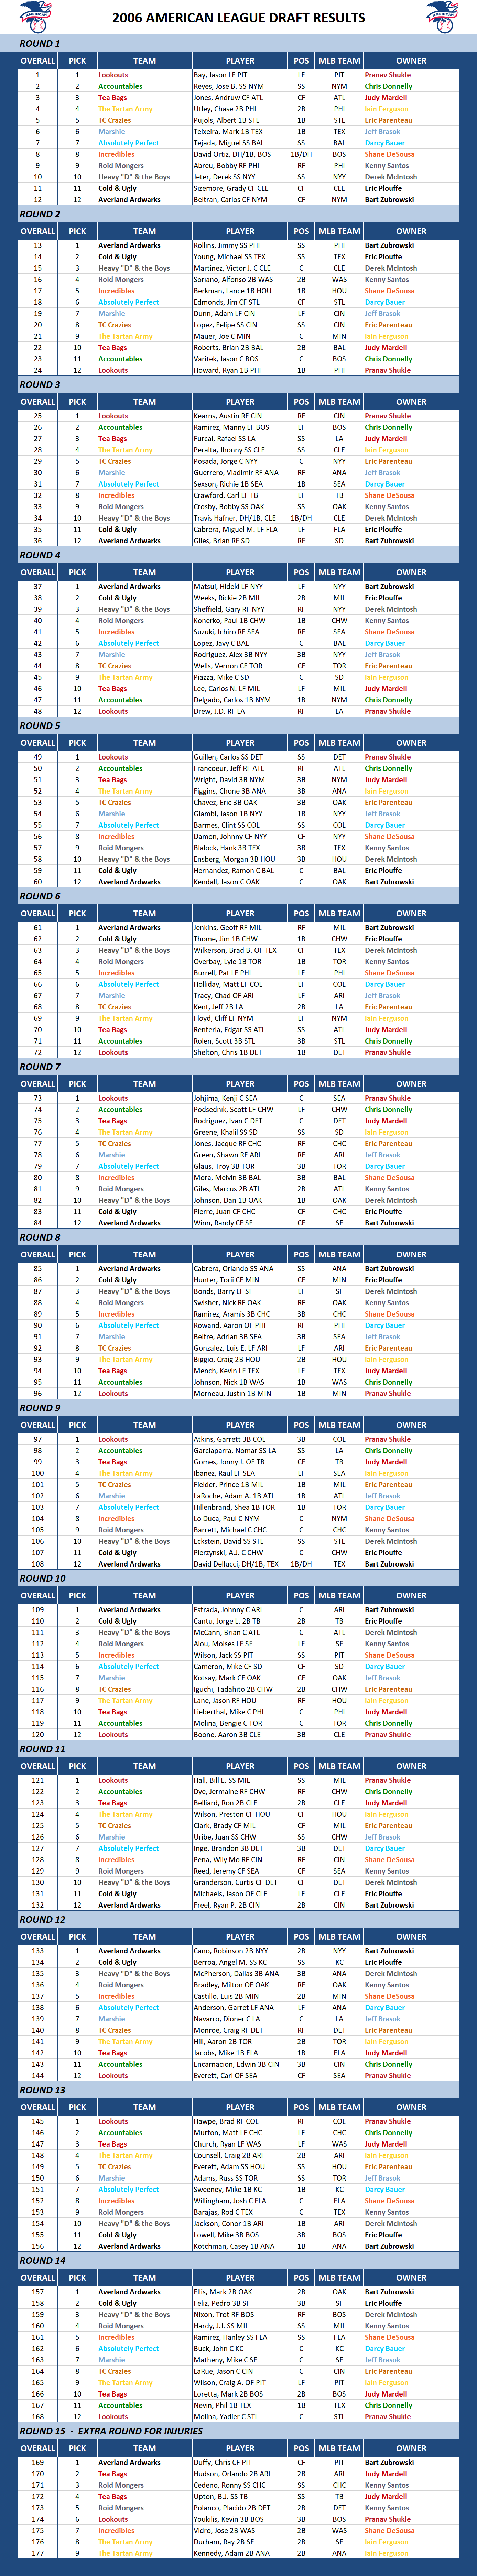 2006 Major league Baseball Draft Results